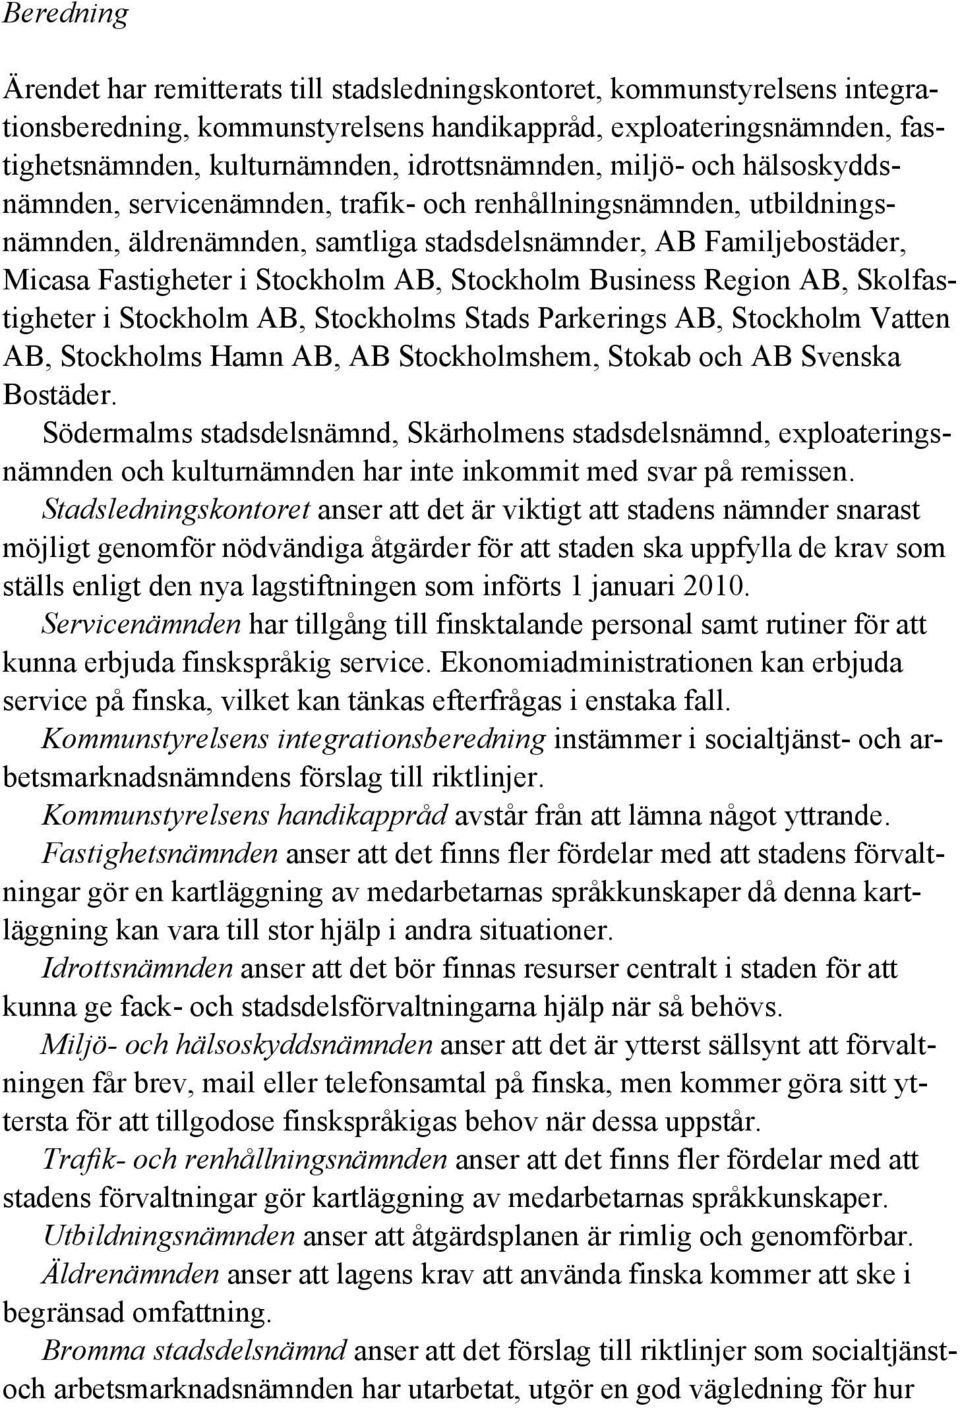 Stockholm AB, Stockholm Business Region AB, Skolfastigheter i Stockholm AB, Stockholms Stads Parkerings AB, Stockholm Vatten AB, Stockholms Hamn AB, AB Stockholmshem, Stokab och AB Svenska Bostäder.